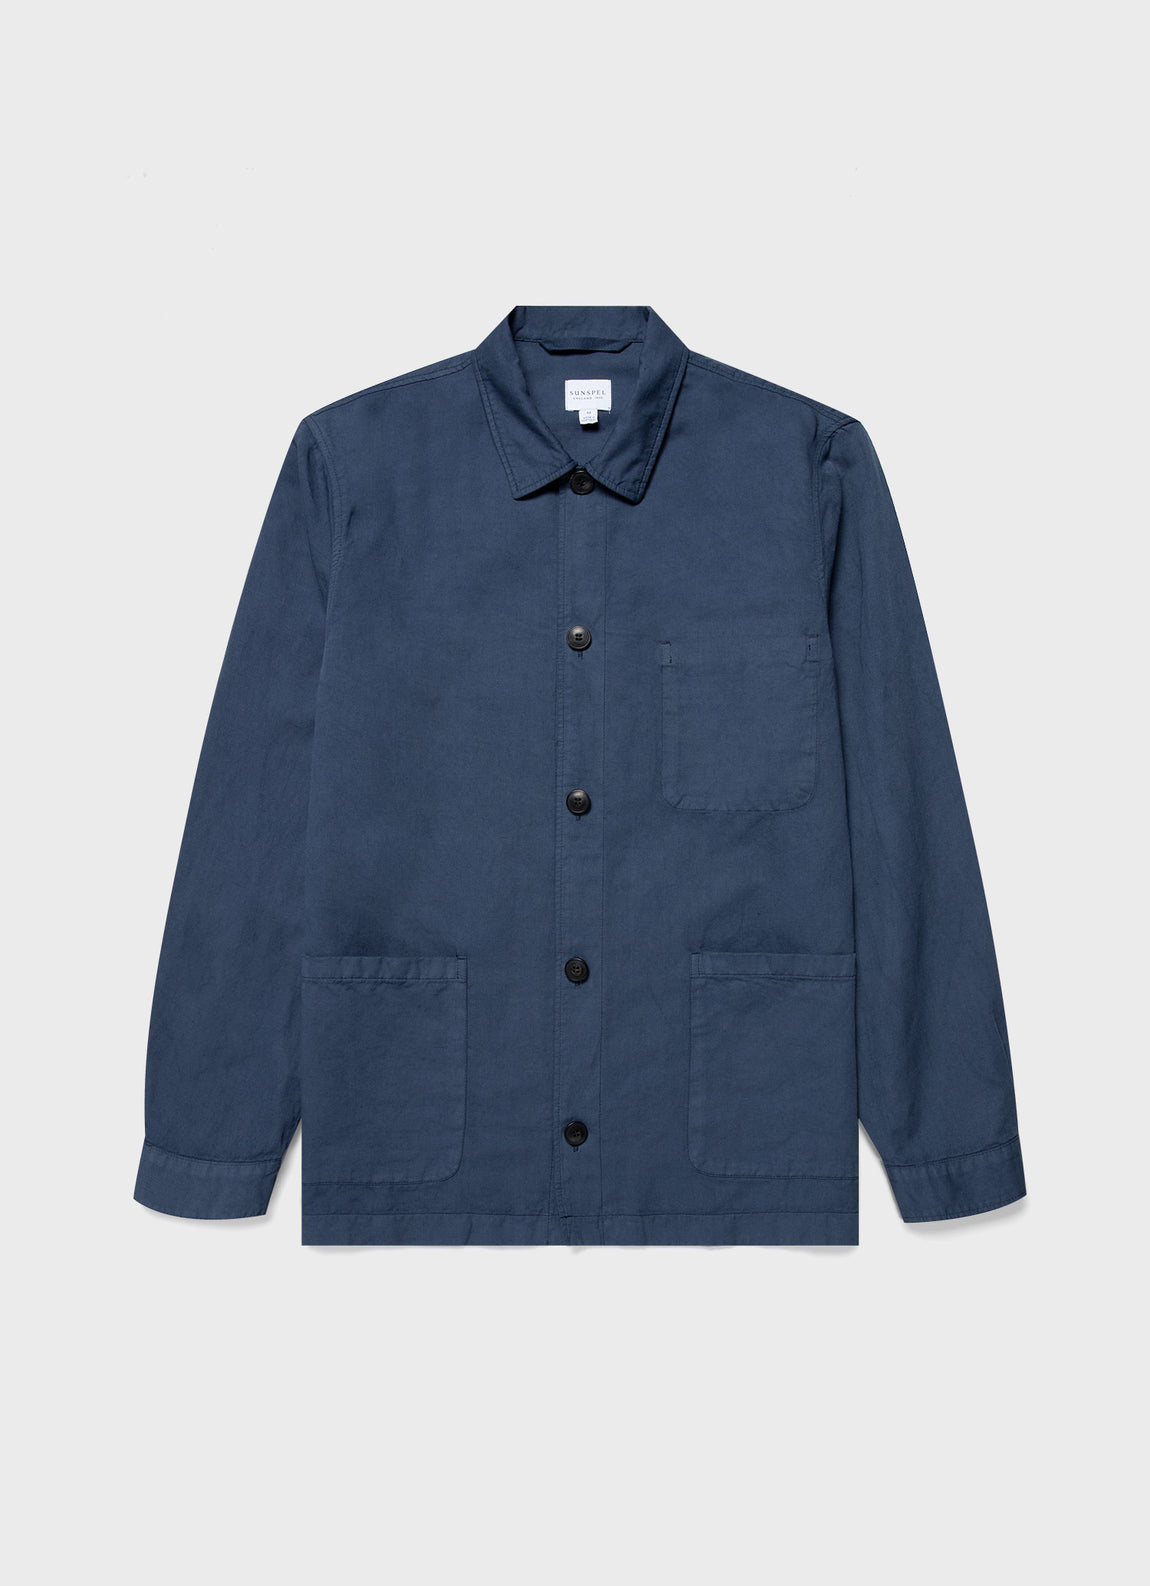 Men's Cotton Linen Twin Pocket Jacket in Shale Blue